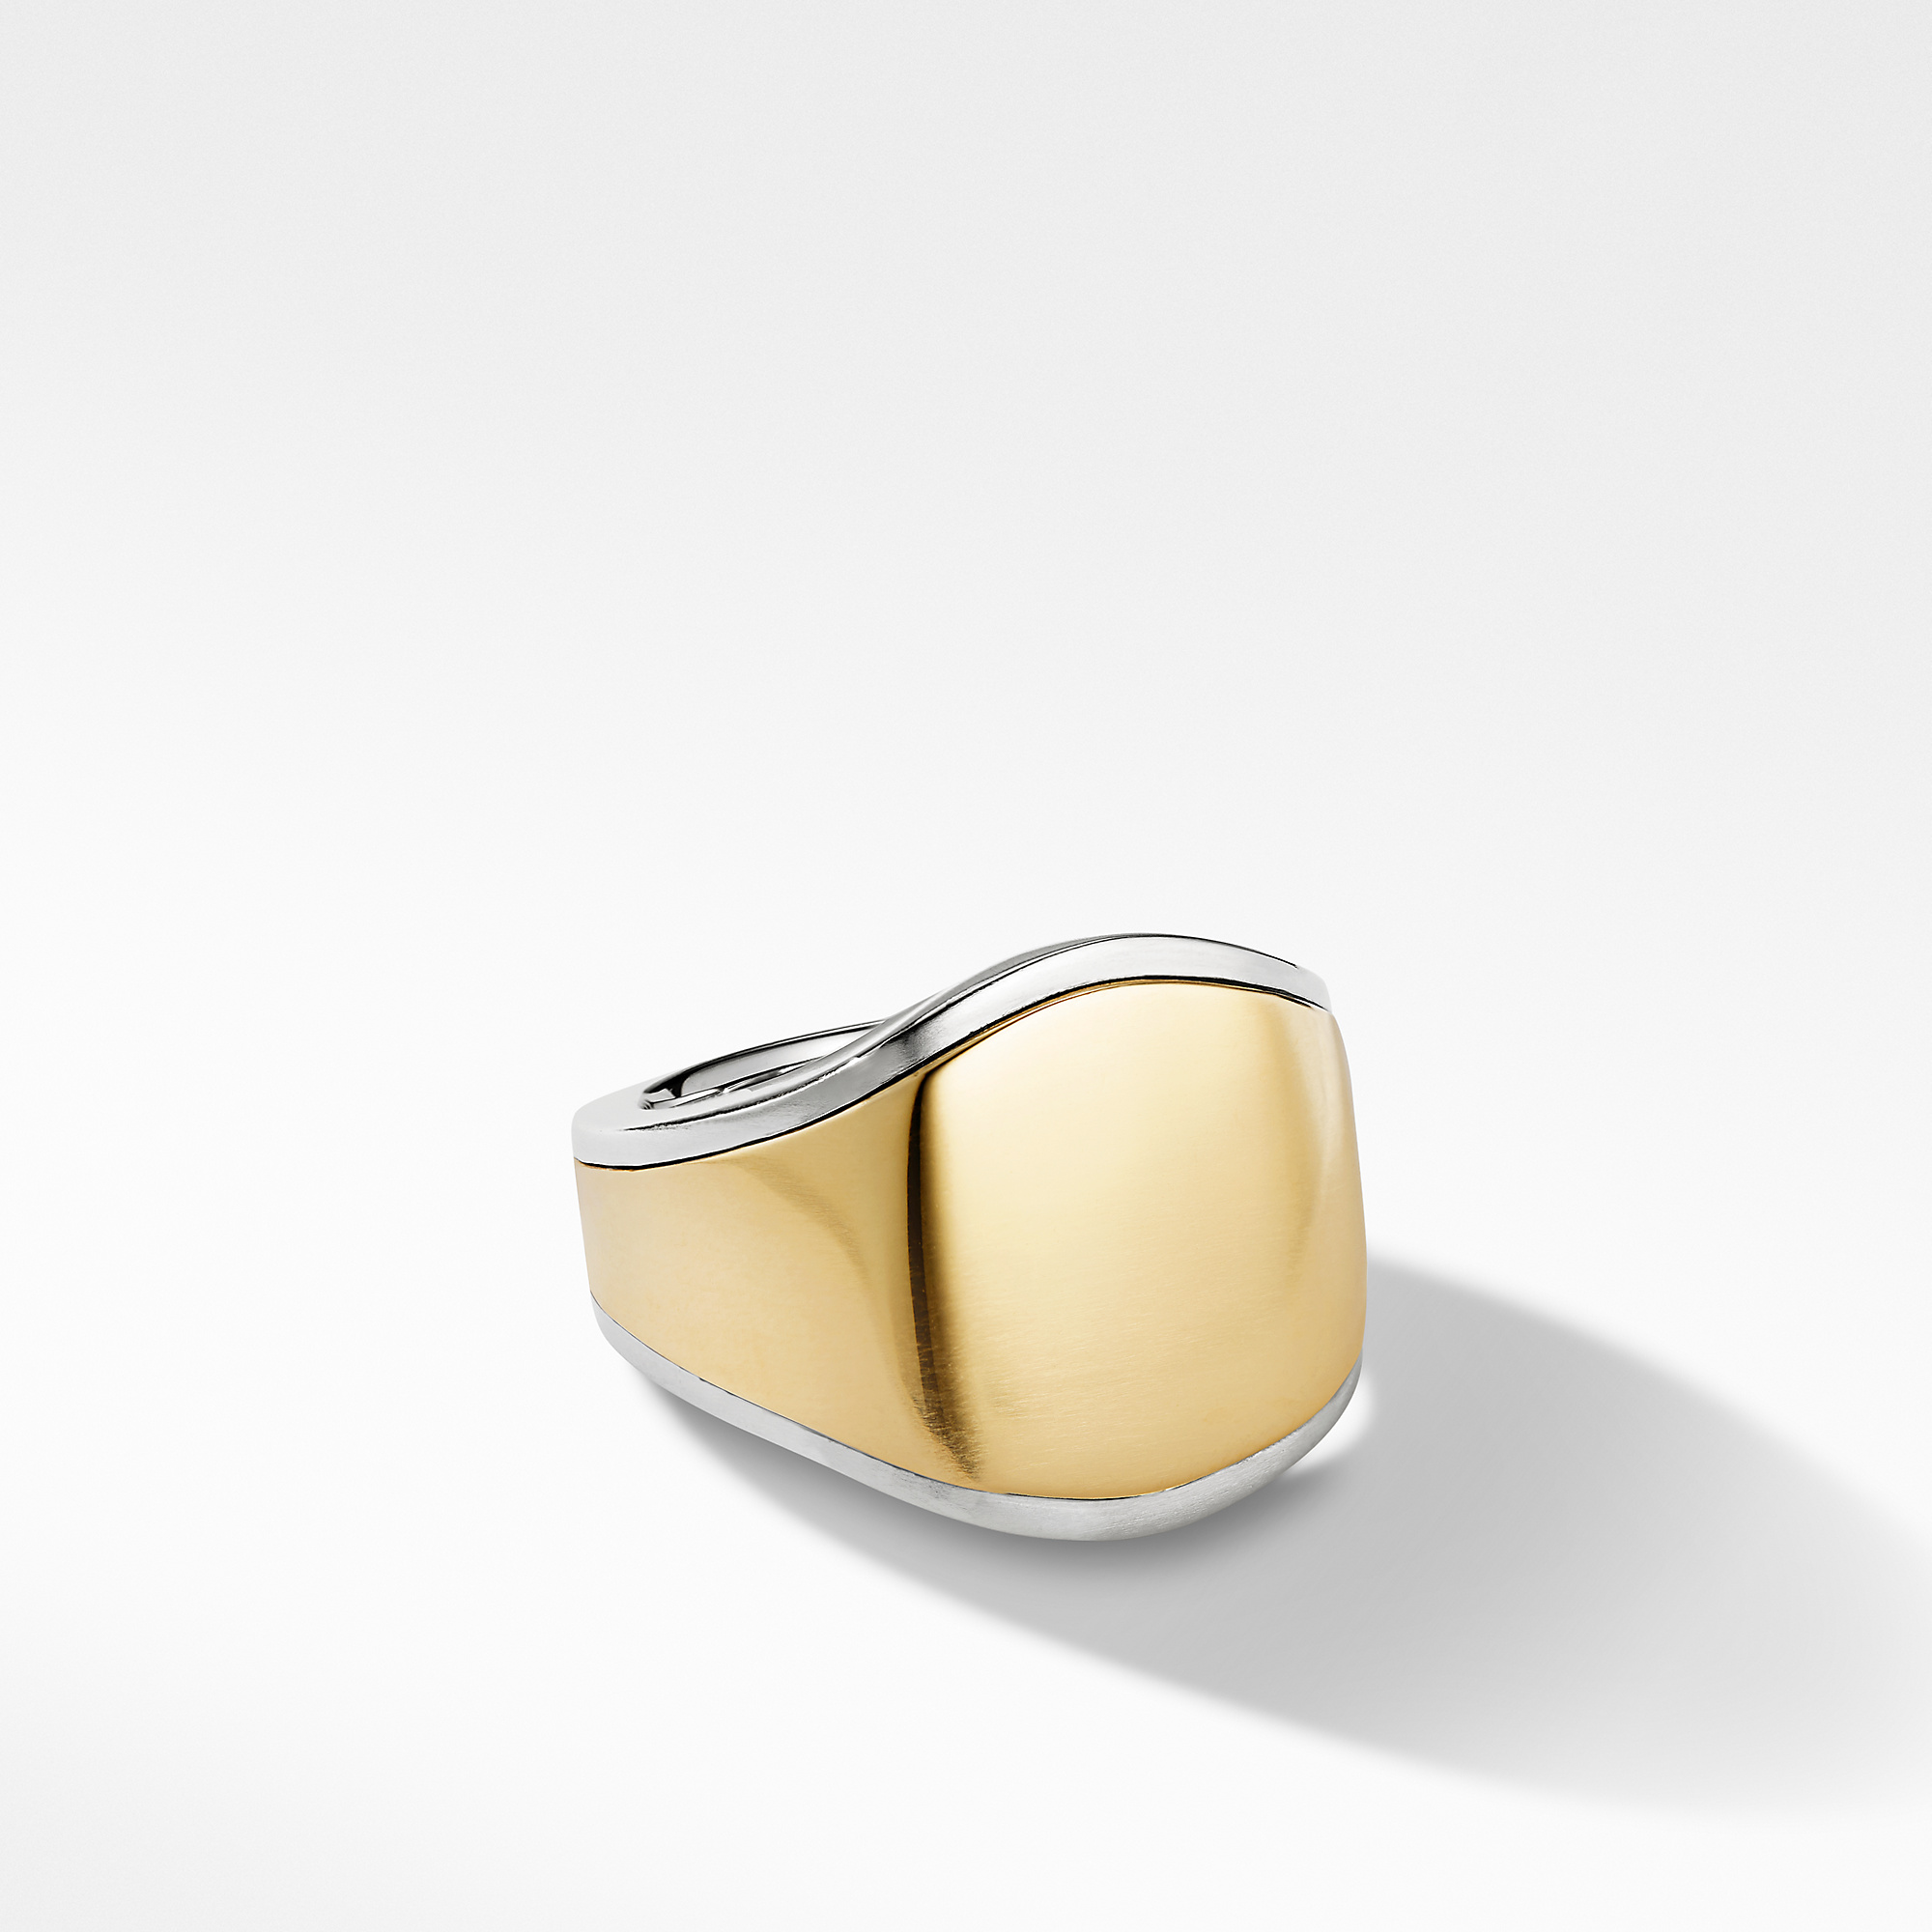 David Yurman Mens Streamline Signet Ring with 18K Yellow Gold, size 10 0